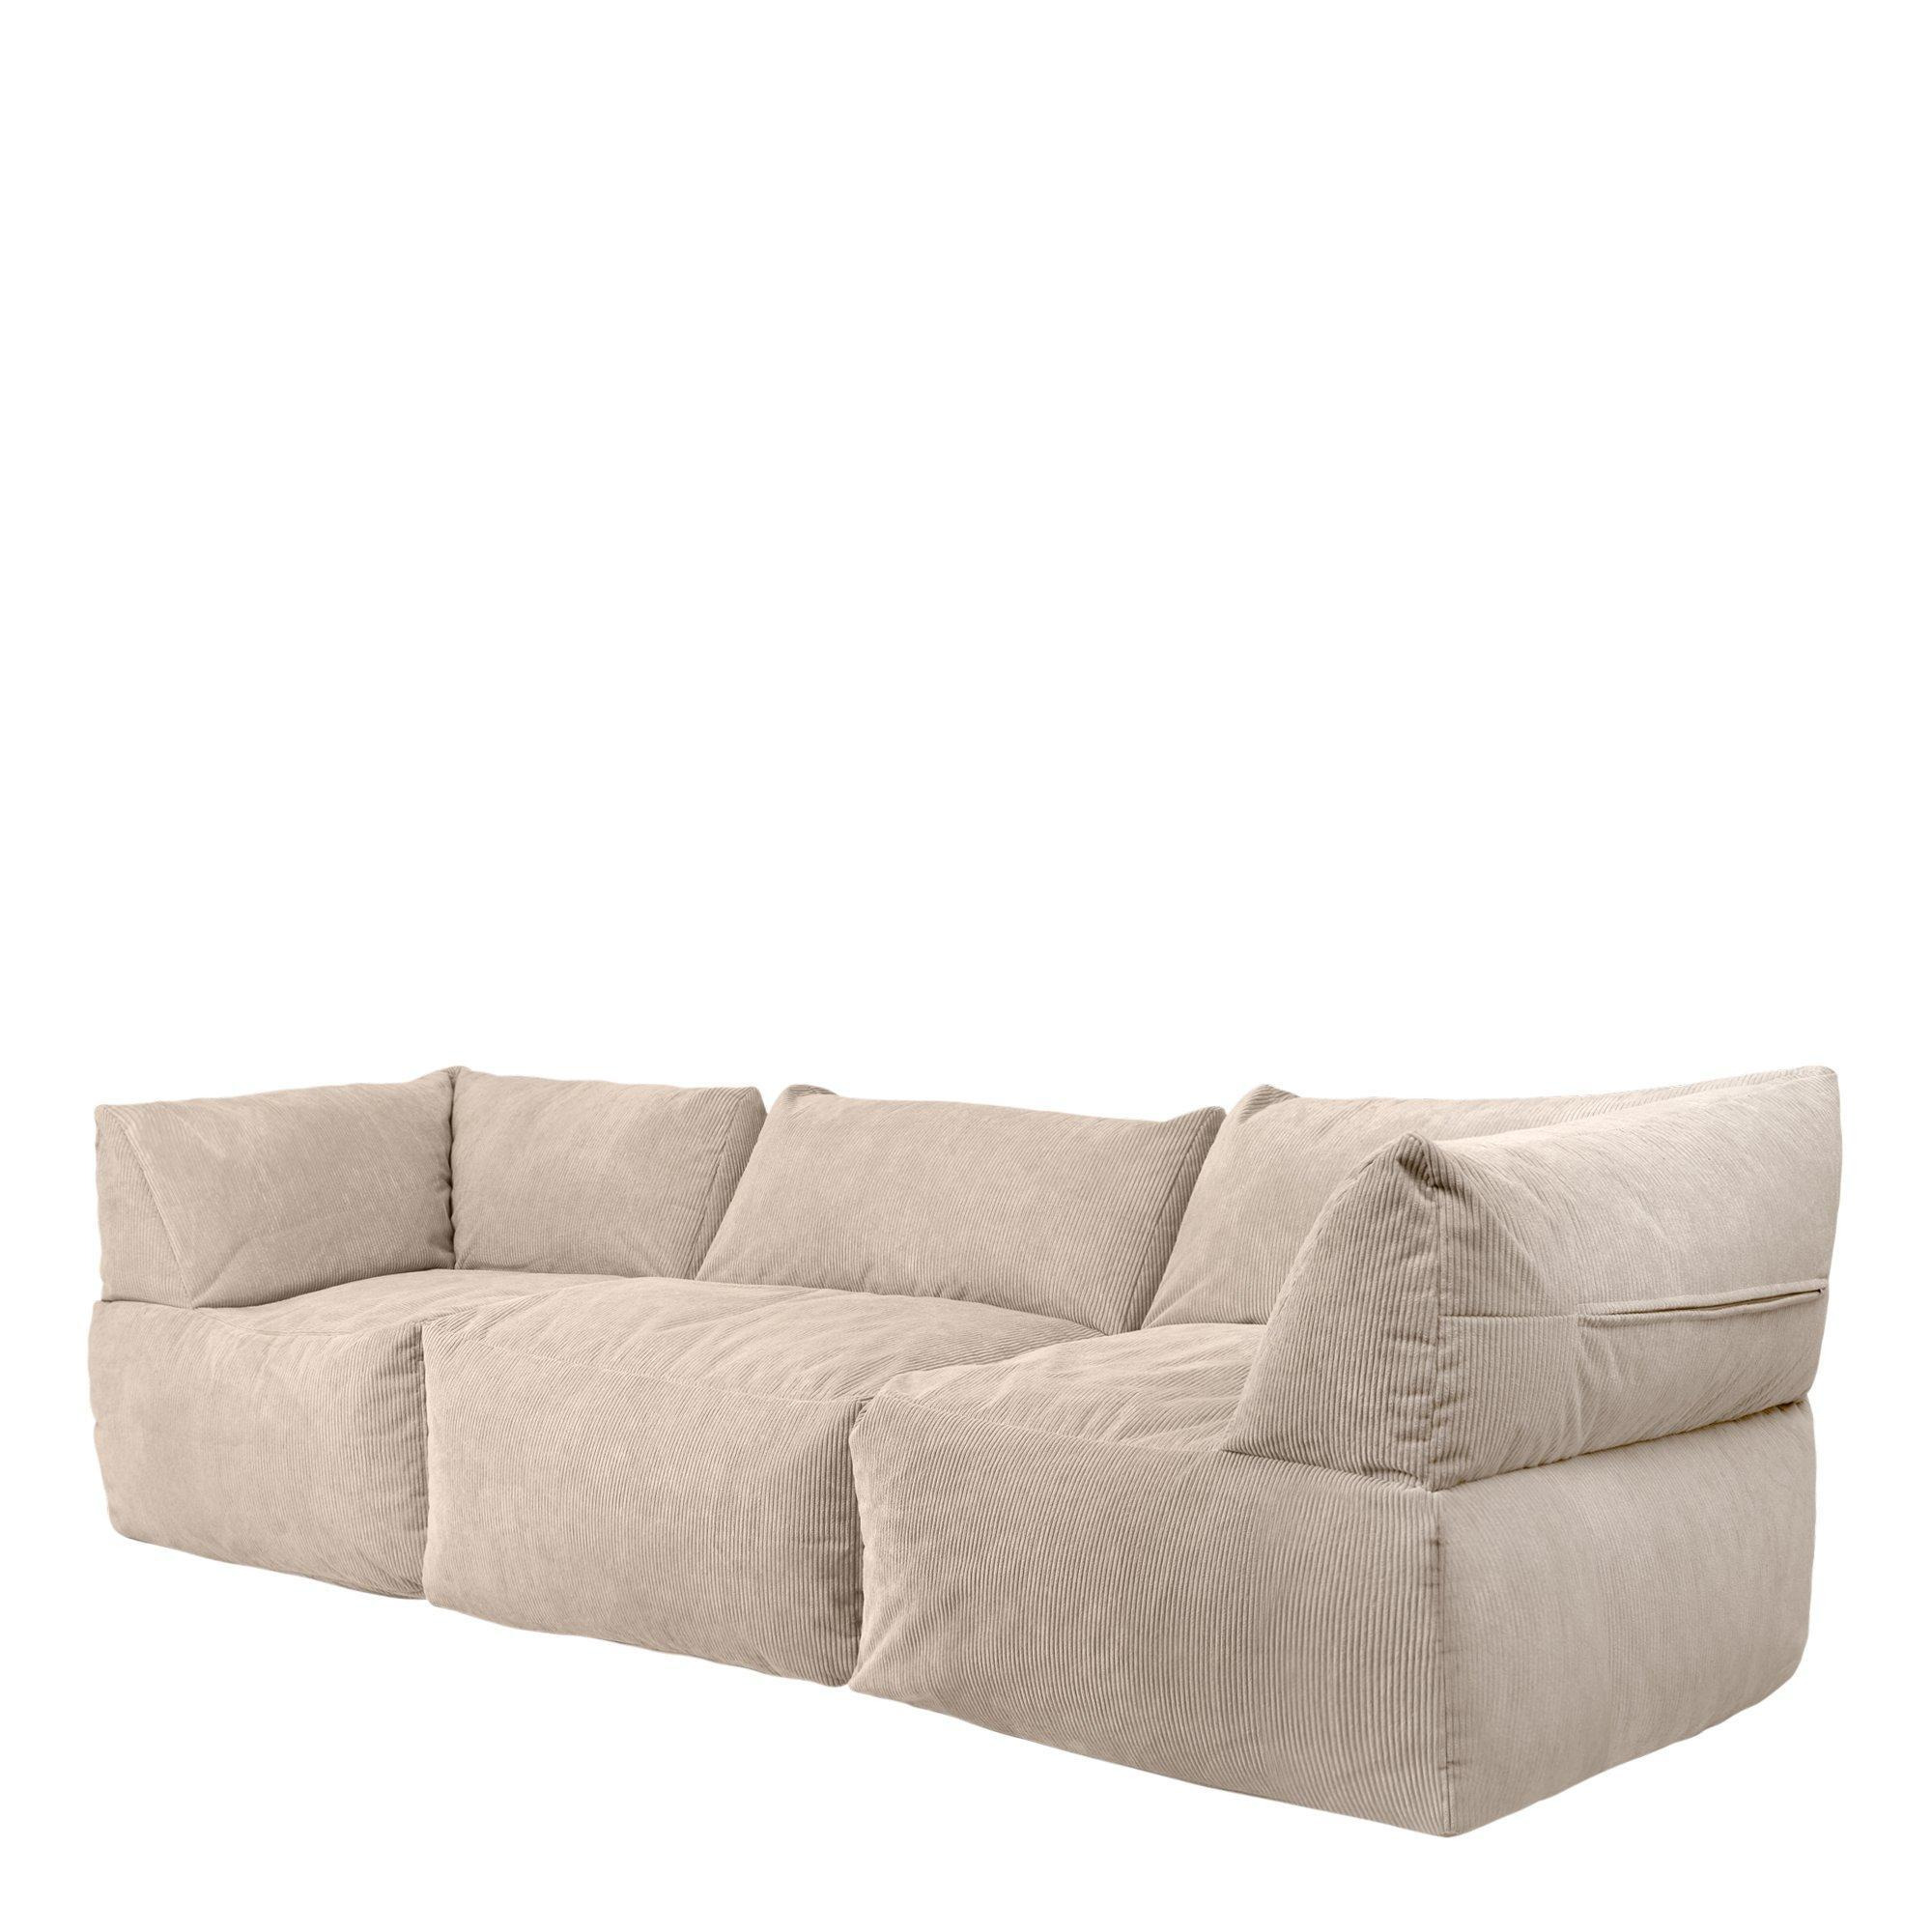 Tetra Fine Cord Natural Modular Sofa Set (3 individual sections) - Combination Two - image 1